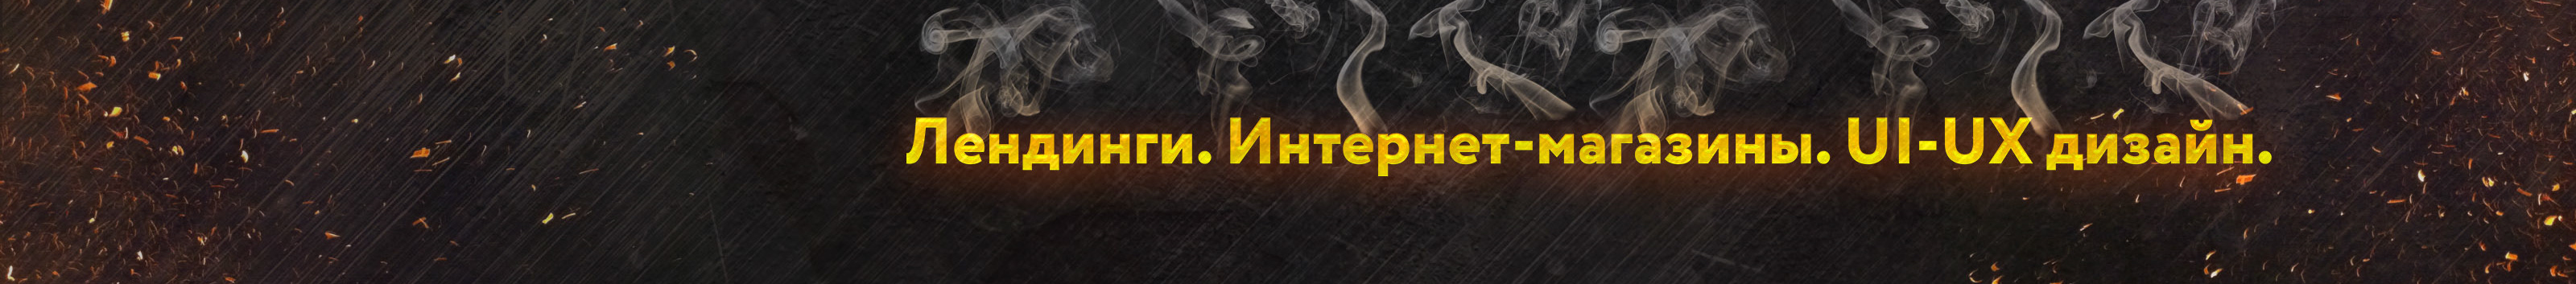 Леонид Крупа's profile banner